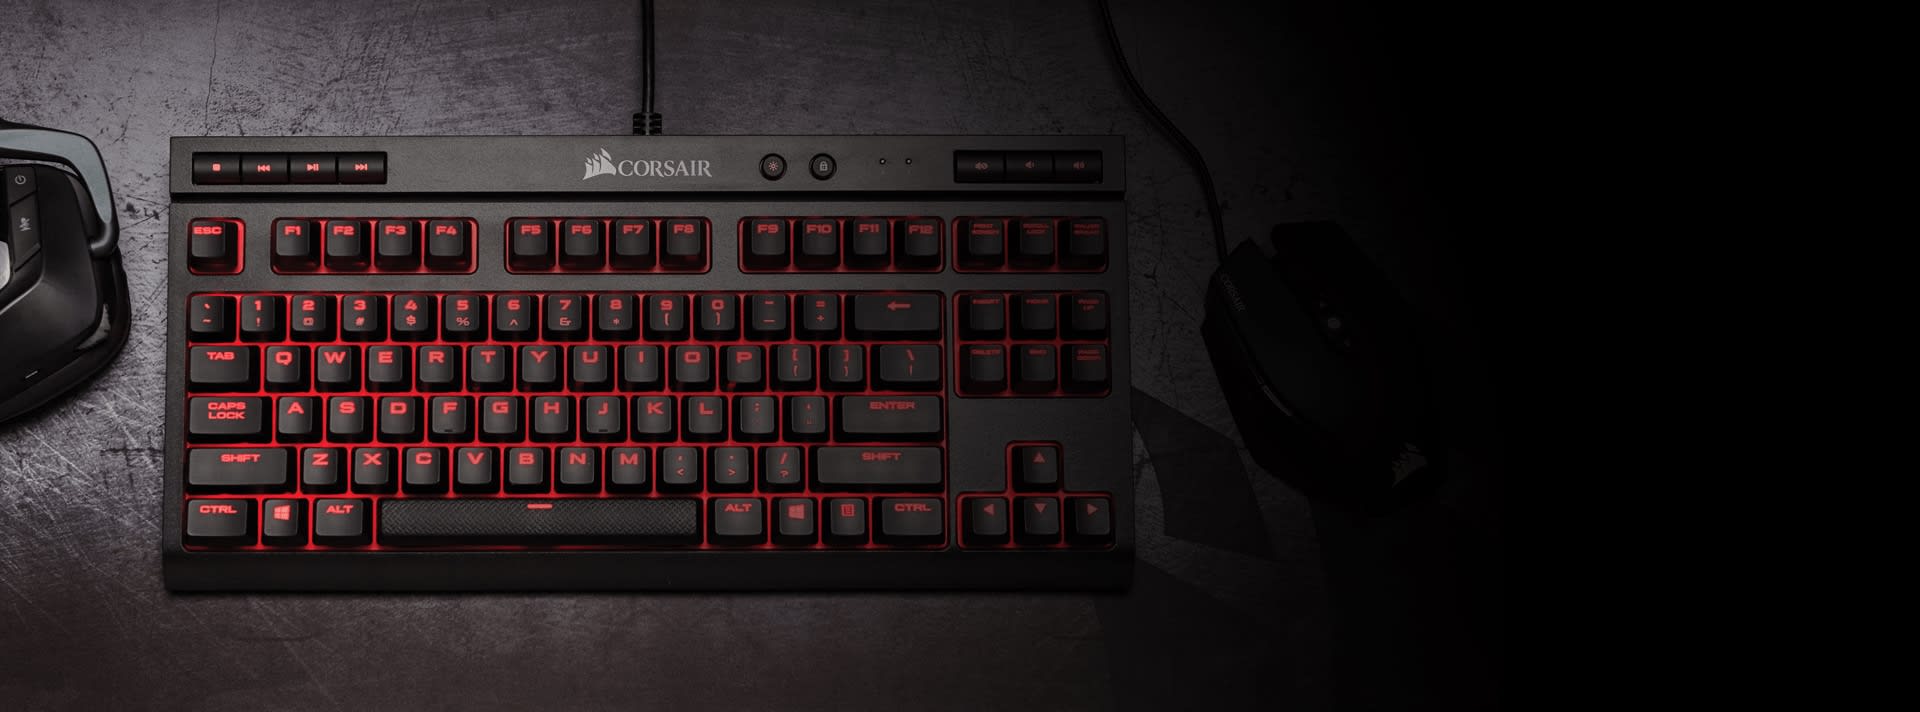 Corsair Gaming K63 Compact Mechanical Keyboard Review 